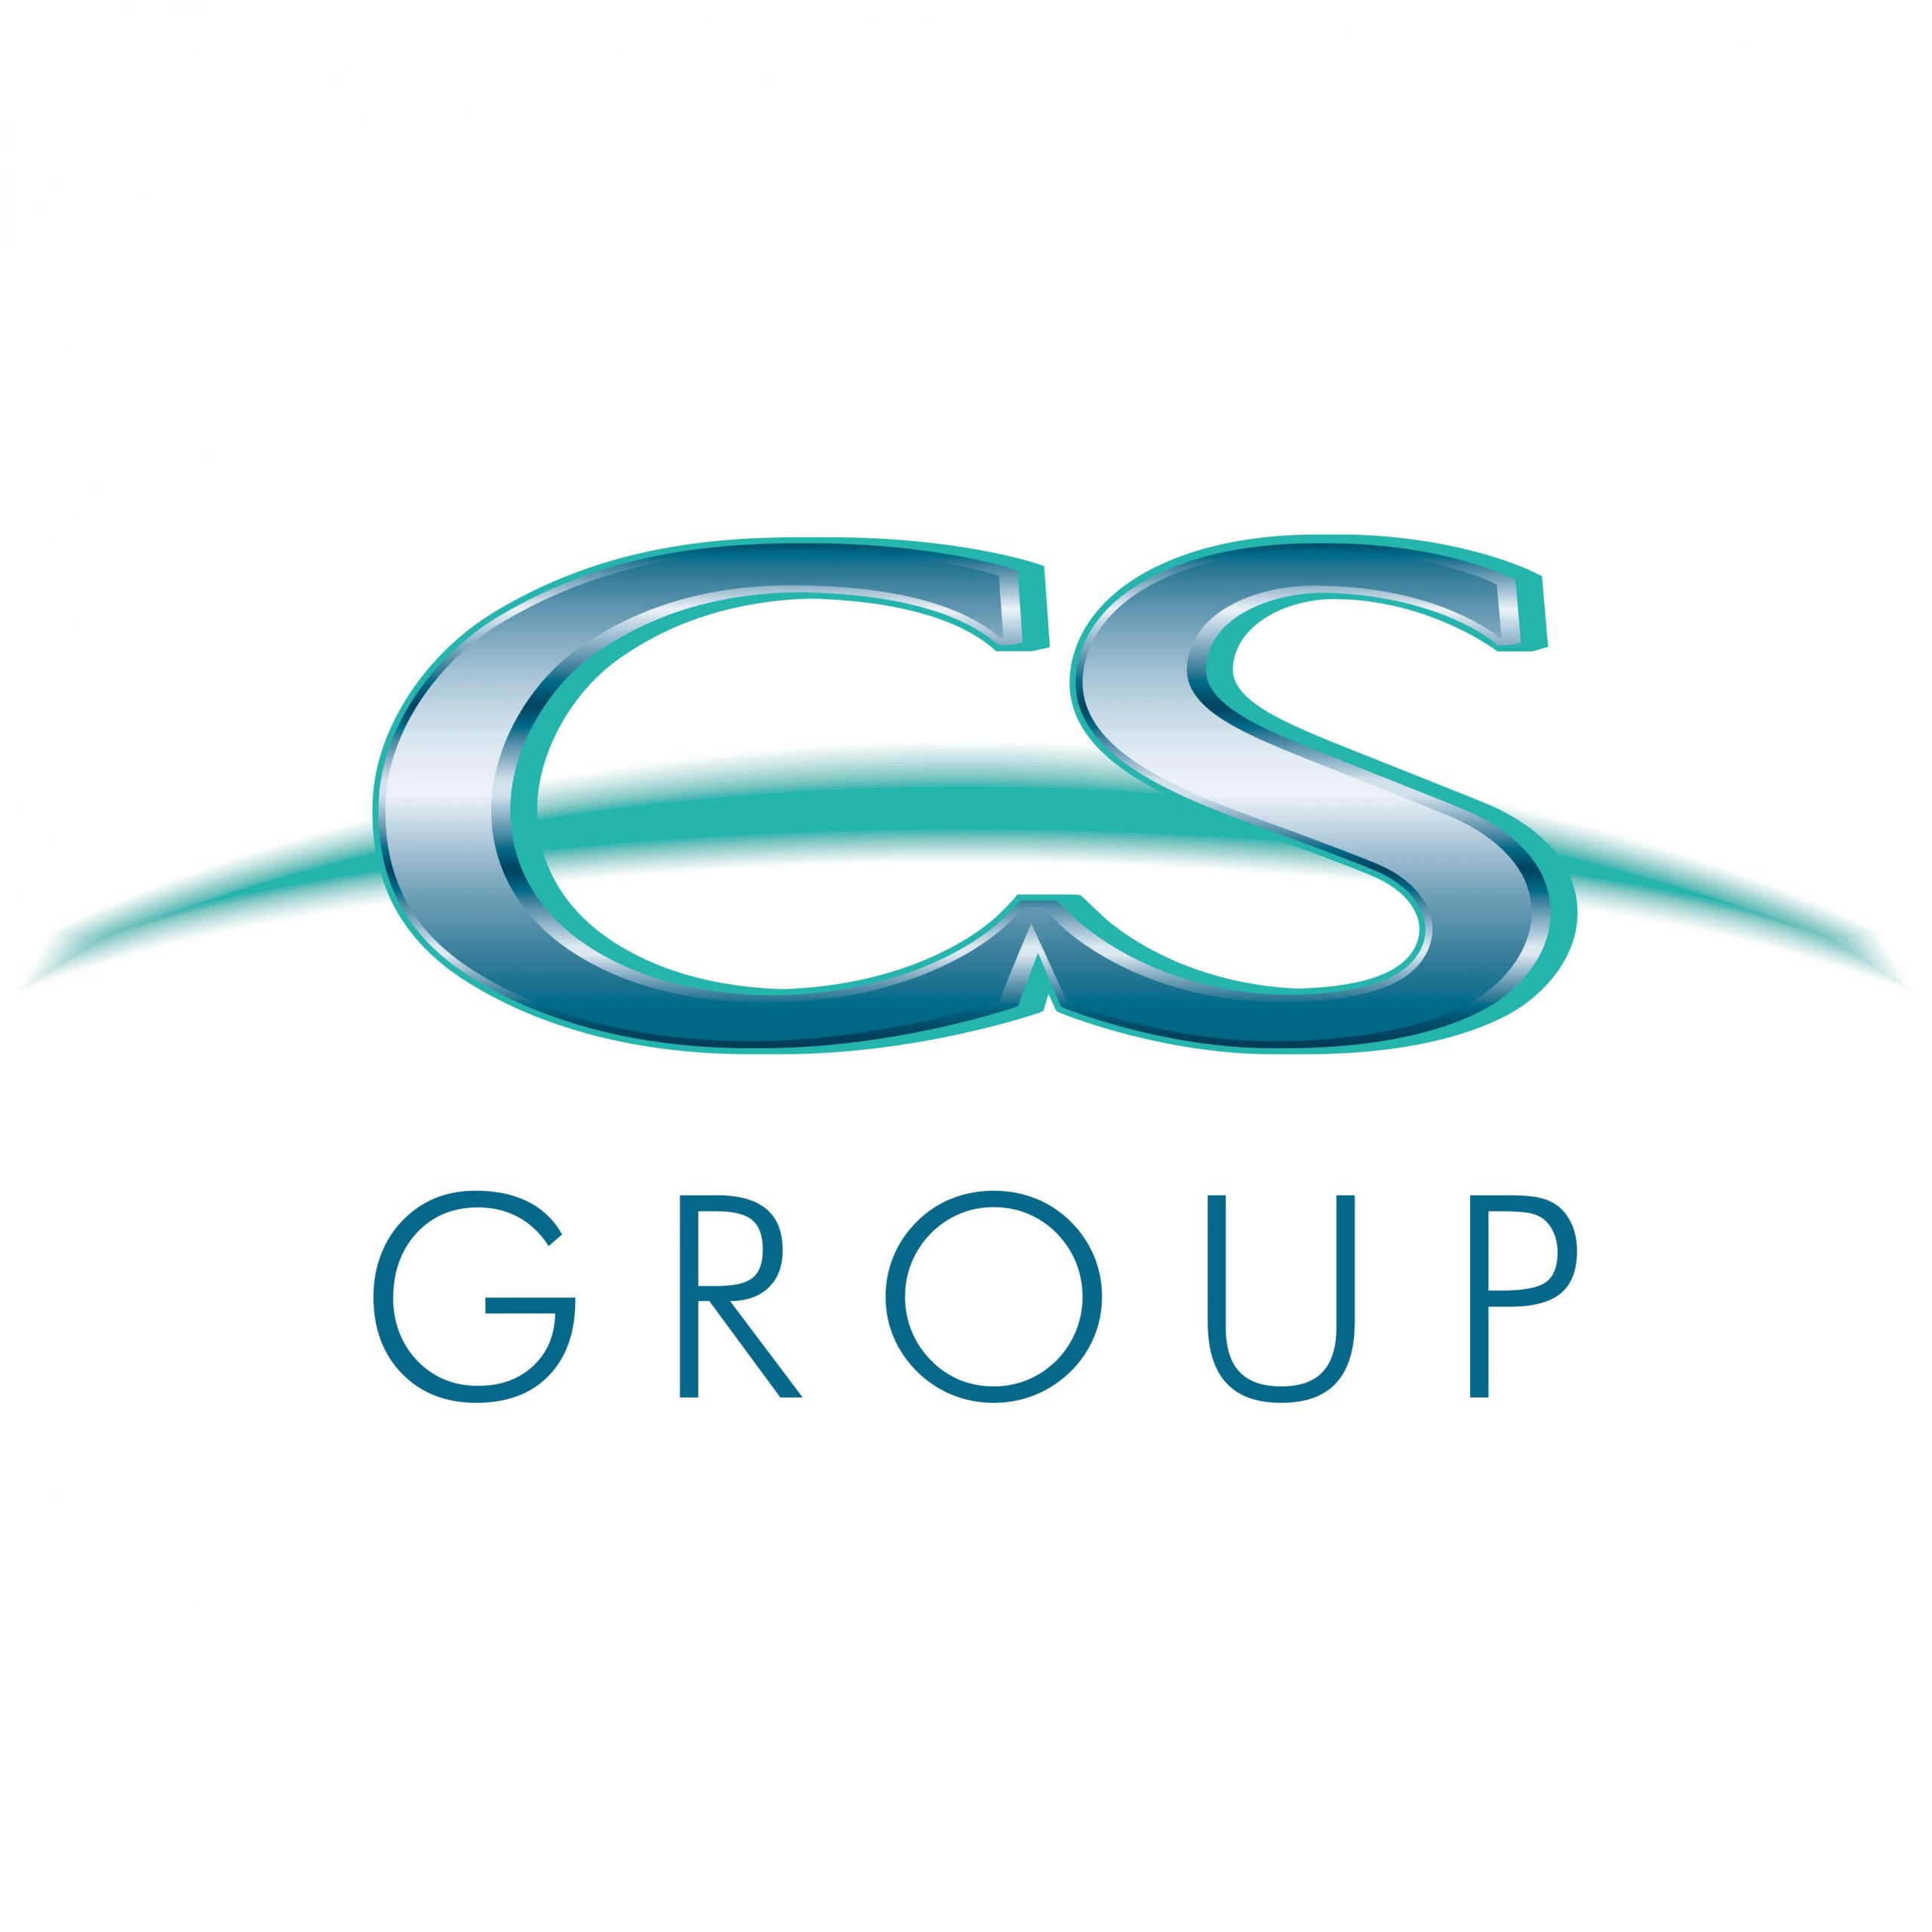 CS Group